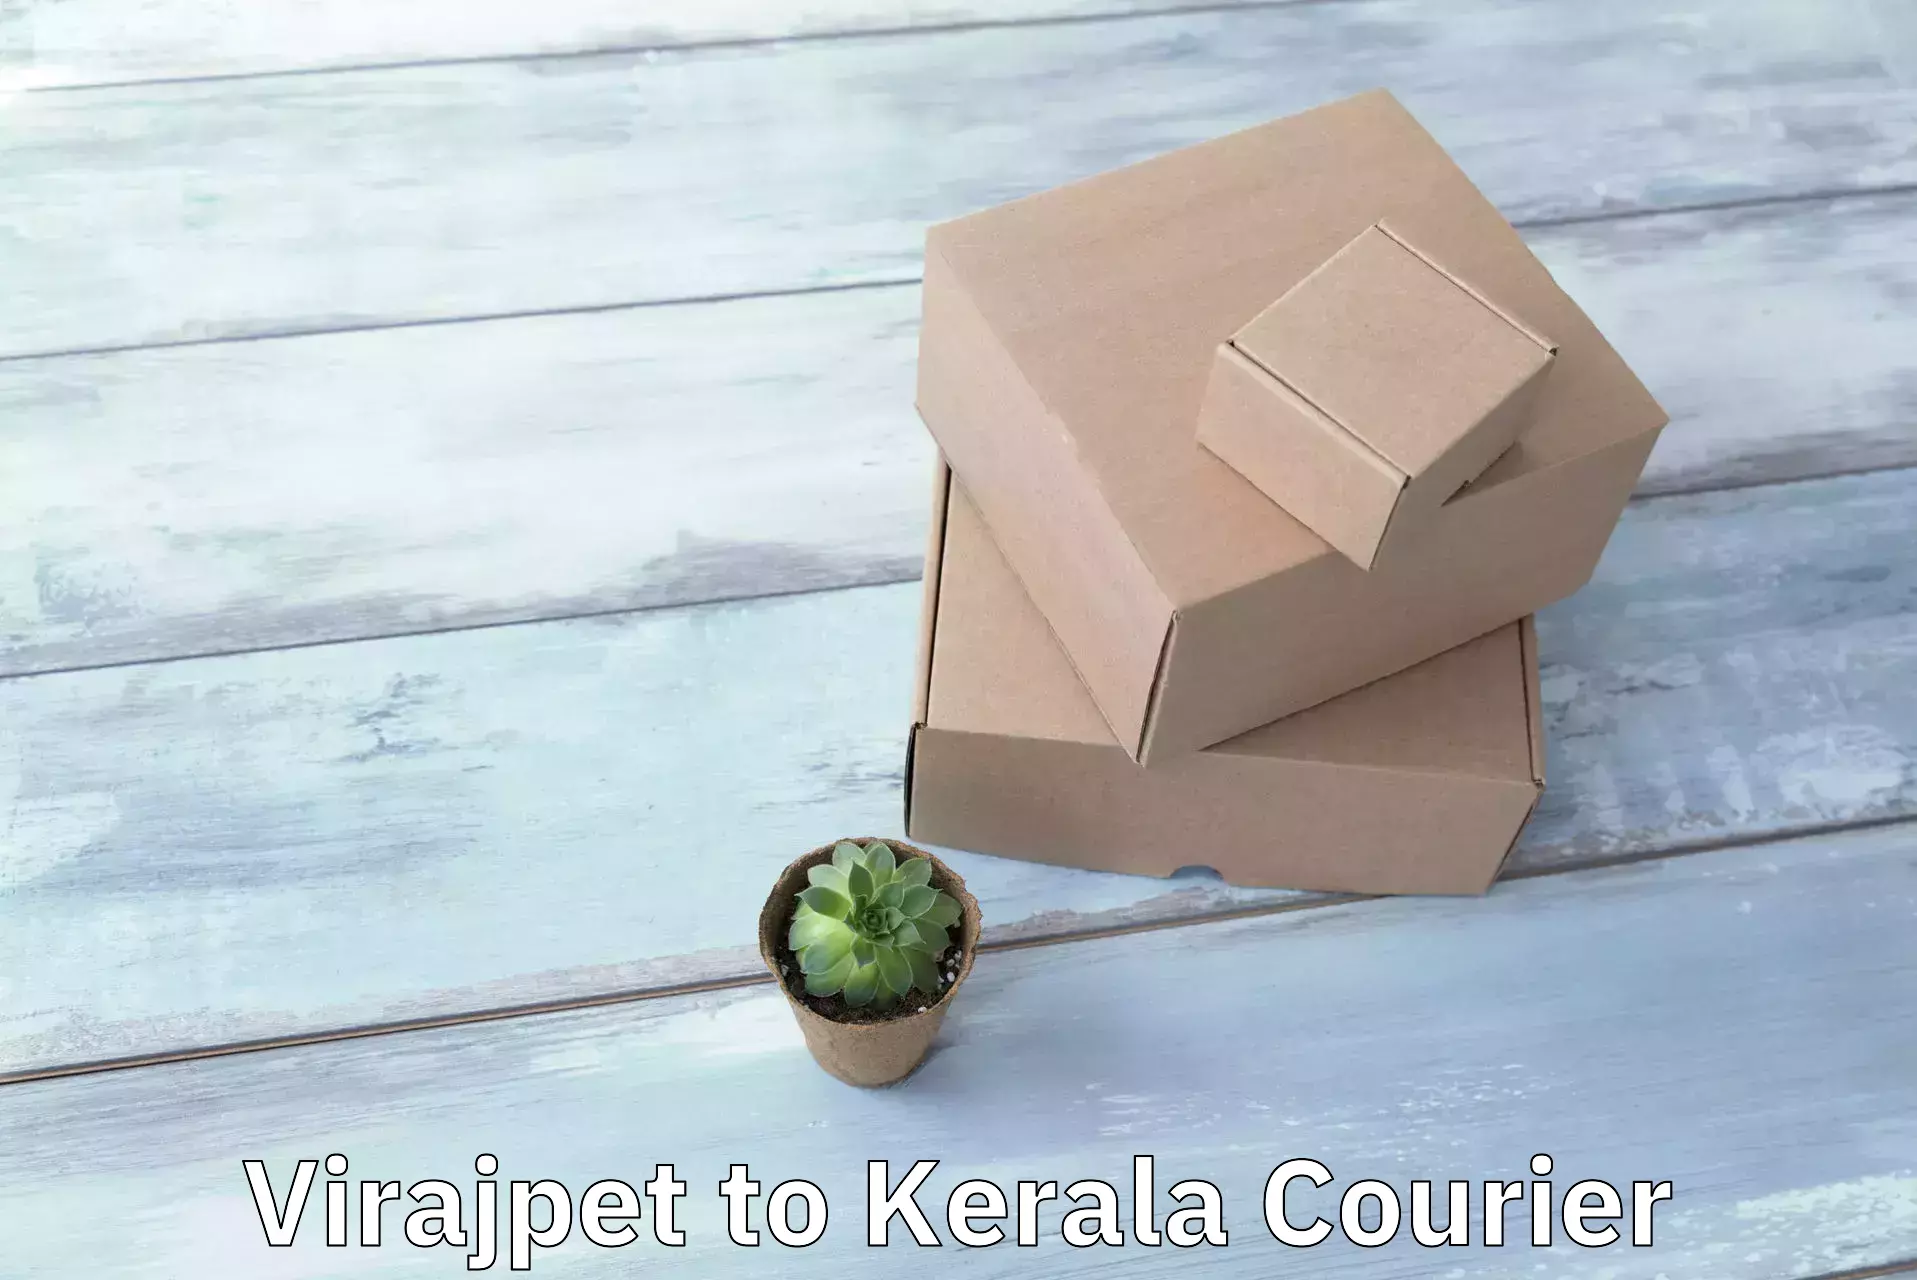 Courier insurance Virajpet to Thrissur